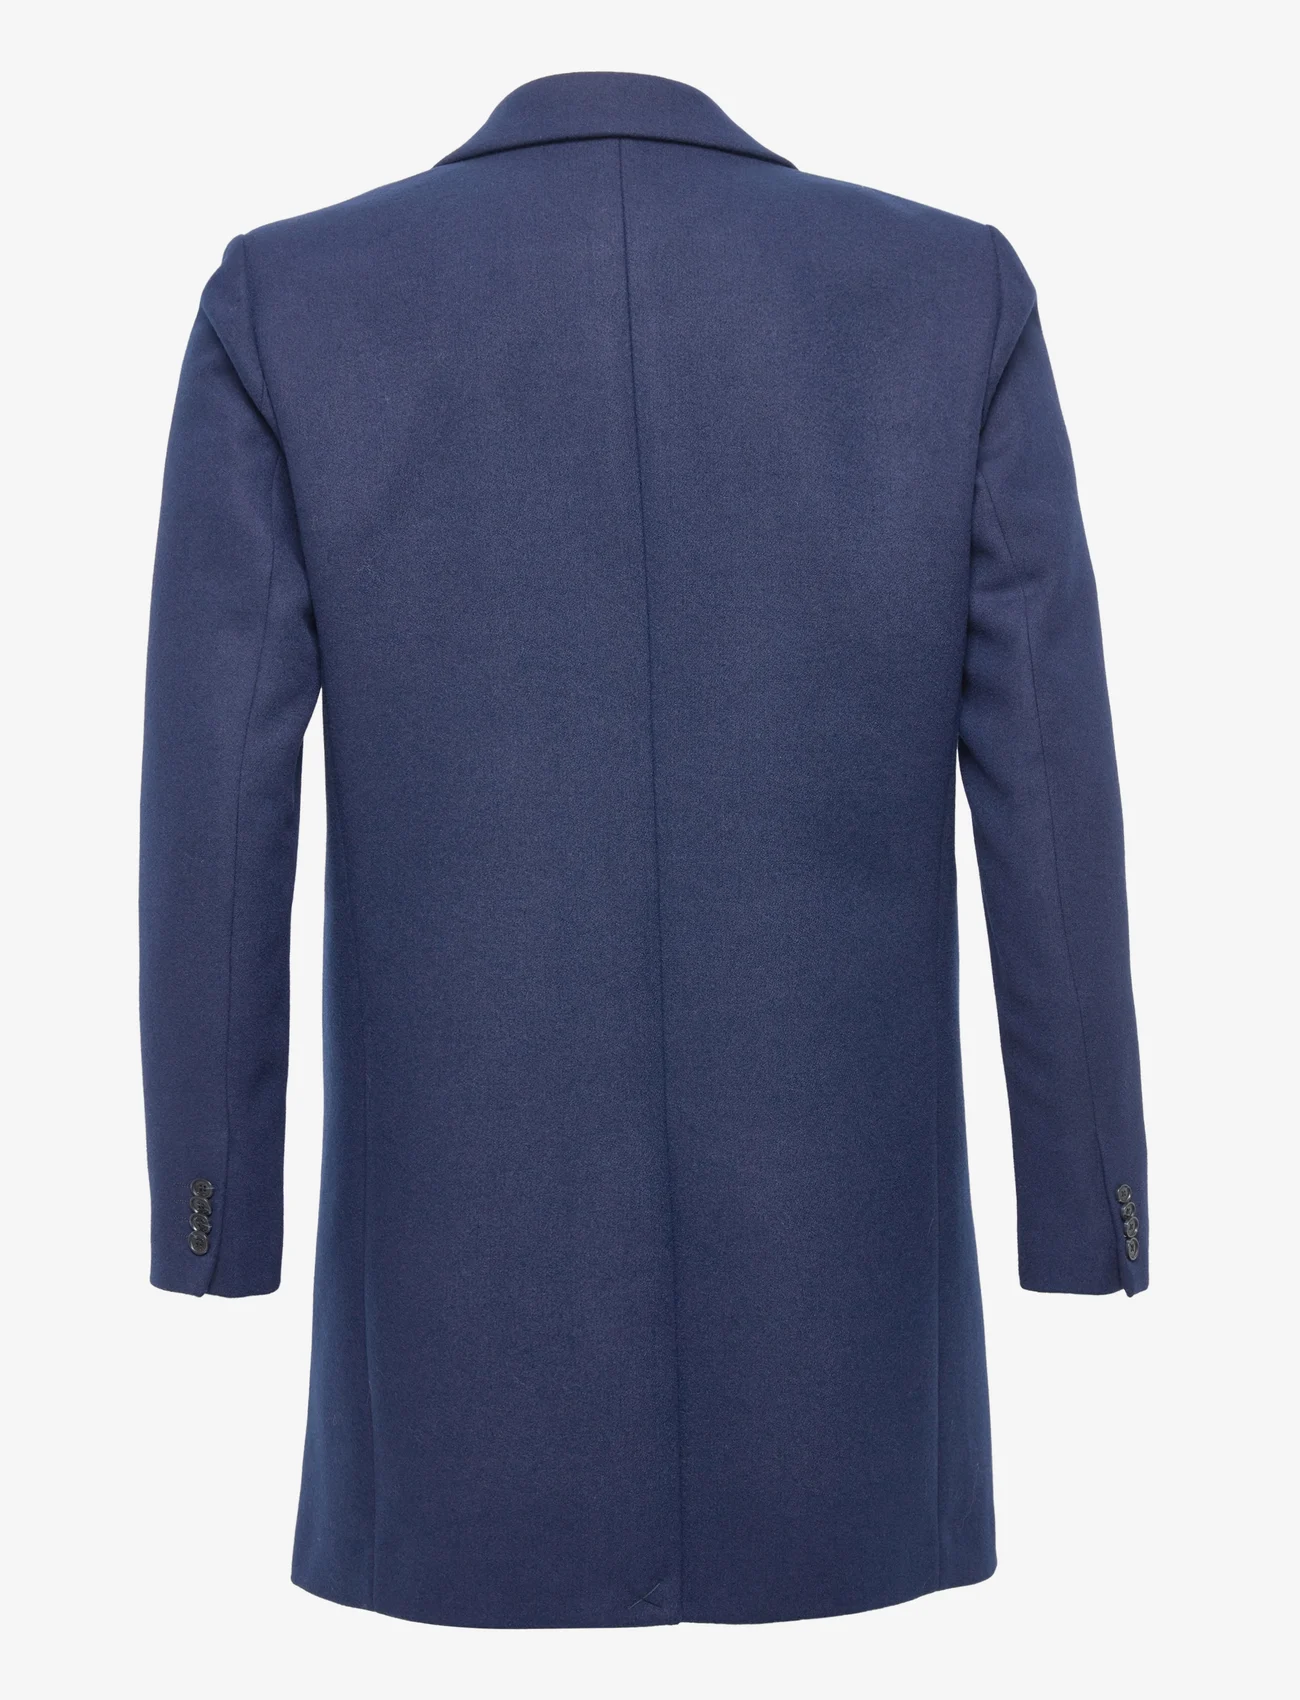 Matinique - MAtrace - winter jackets - navy blazer - 1